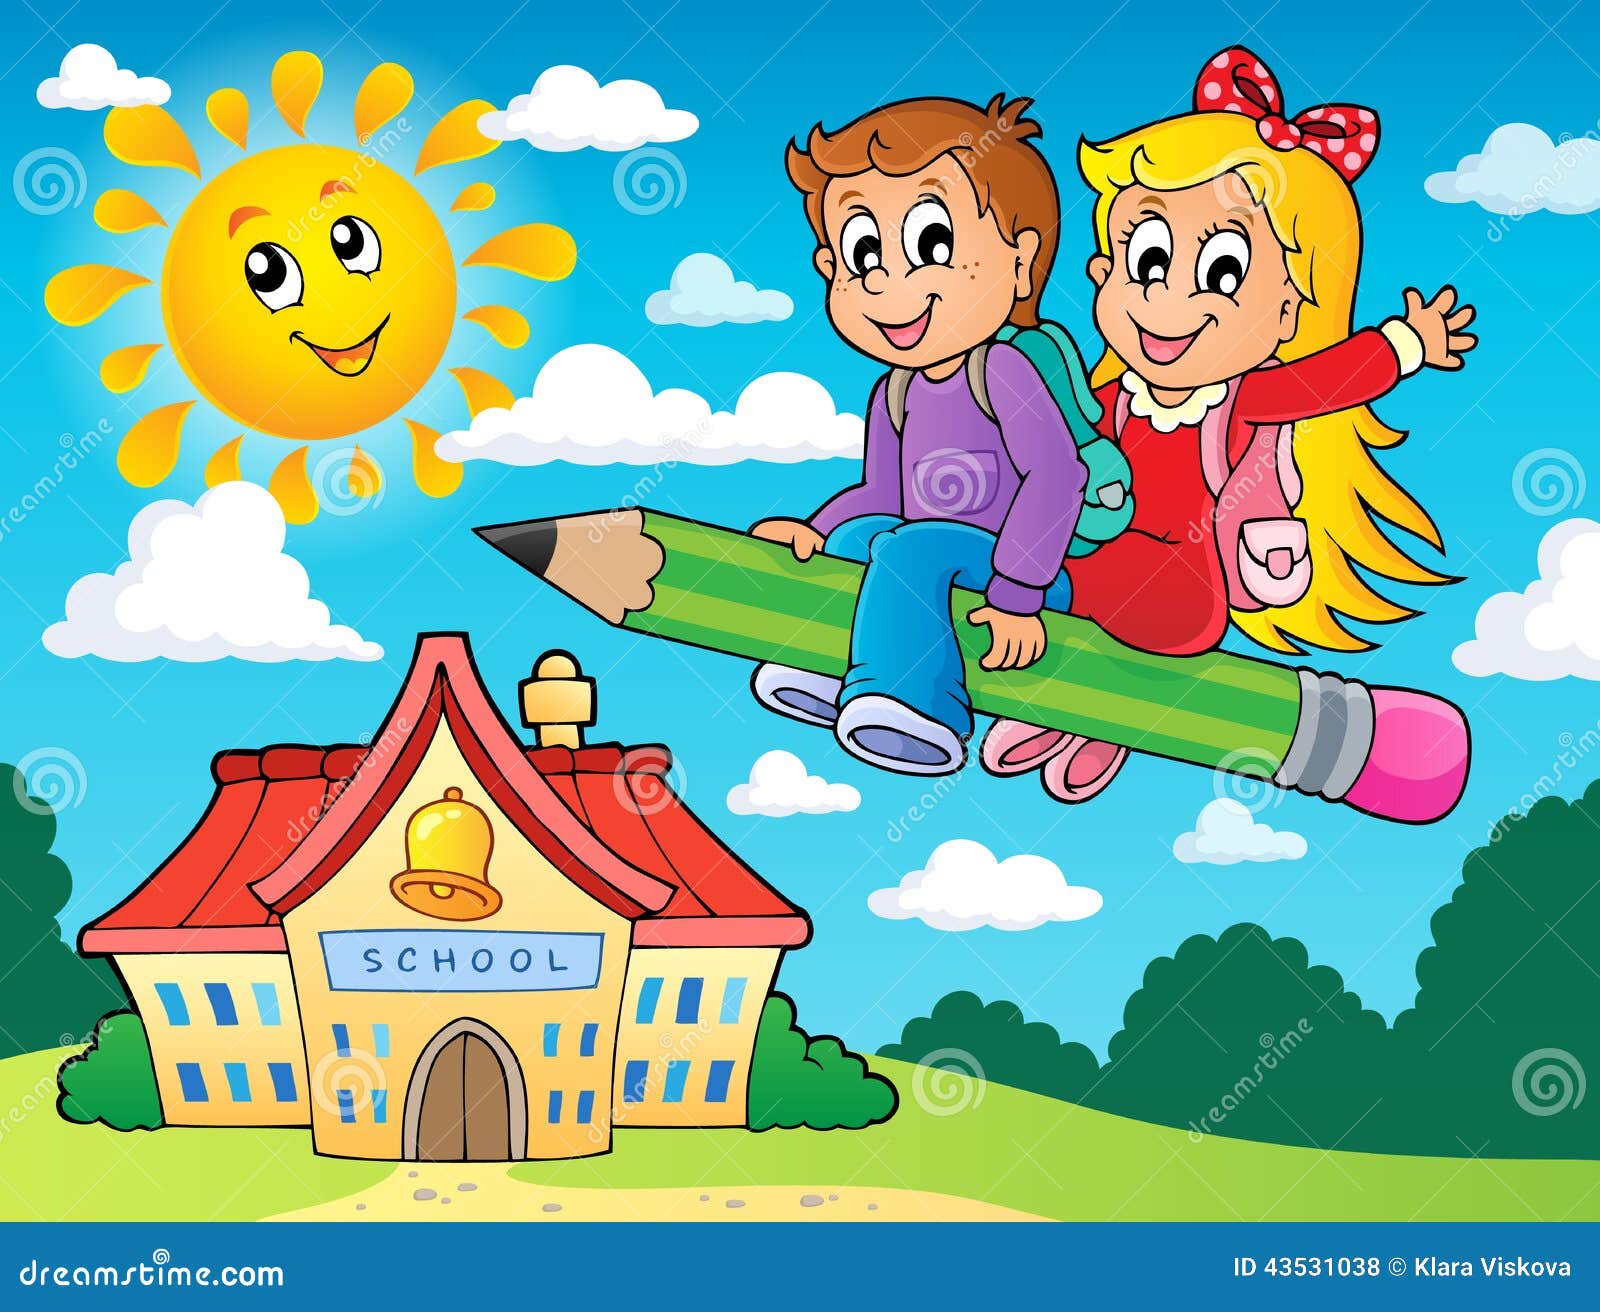 School kids theme image 5 stock vector. Image of happy 